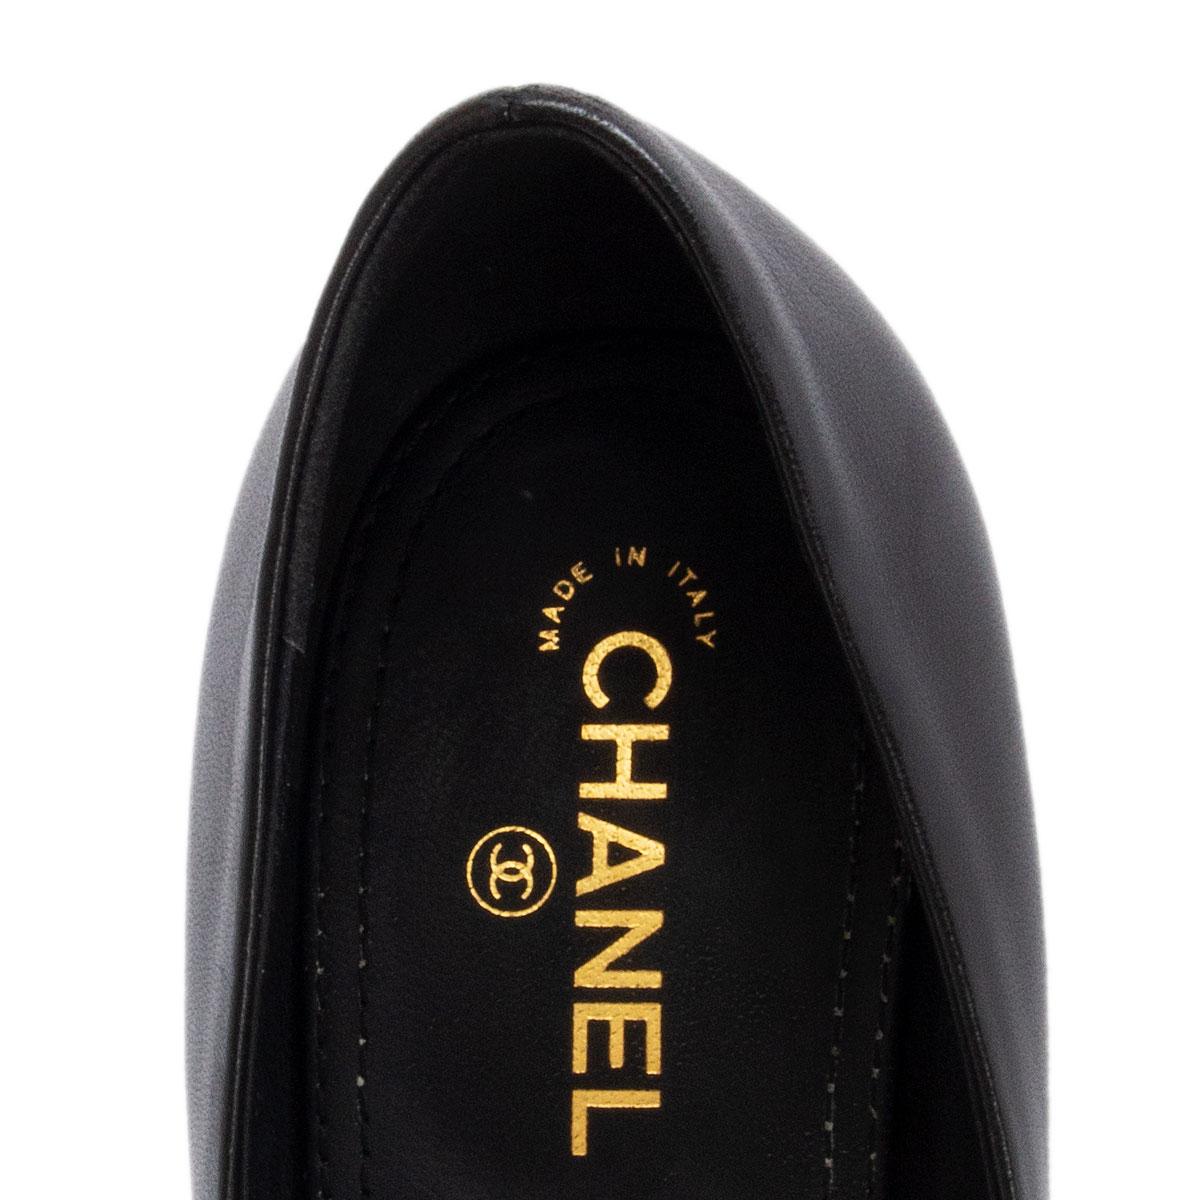 CHANEL black leather CAMELIA BLOCK HEEL Pumps Shoes 38.5 1